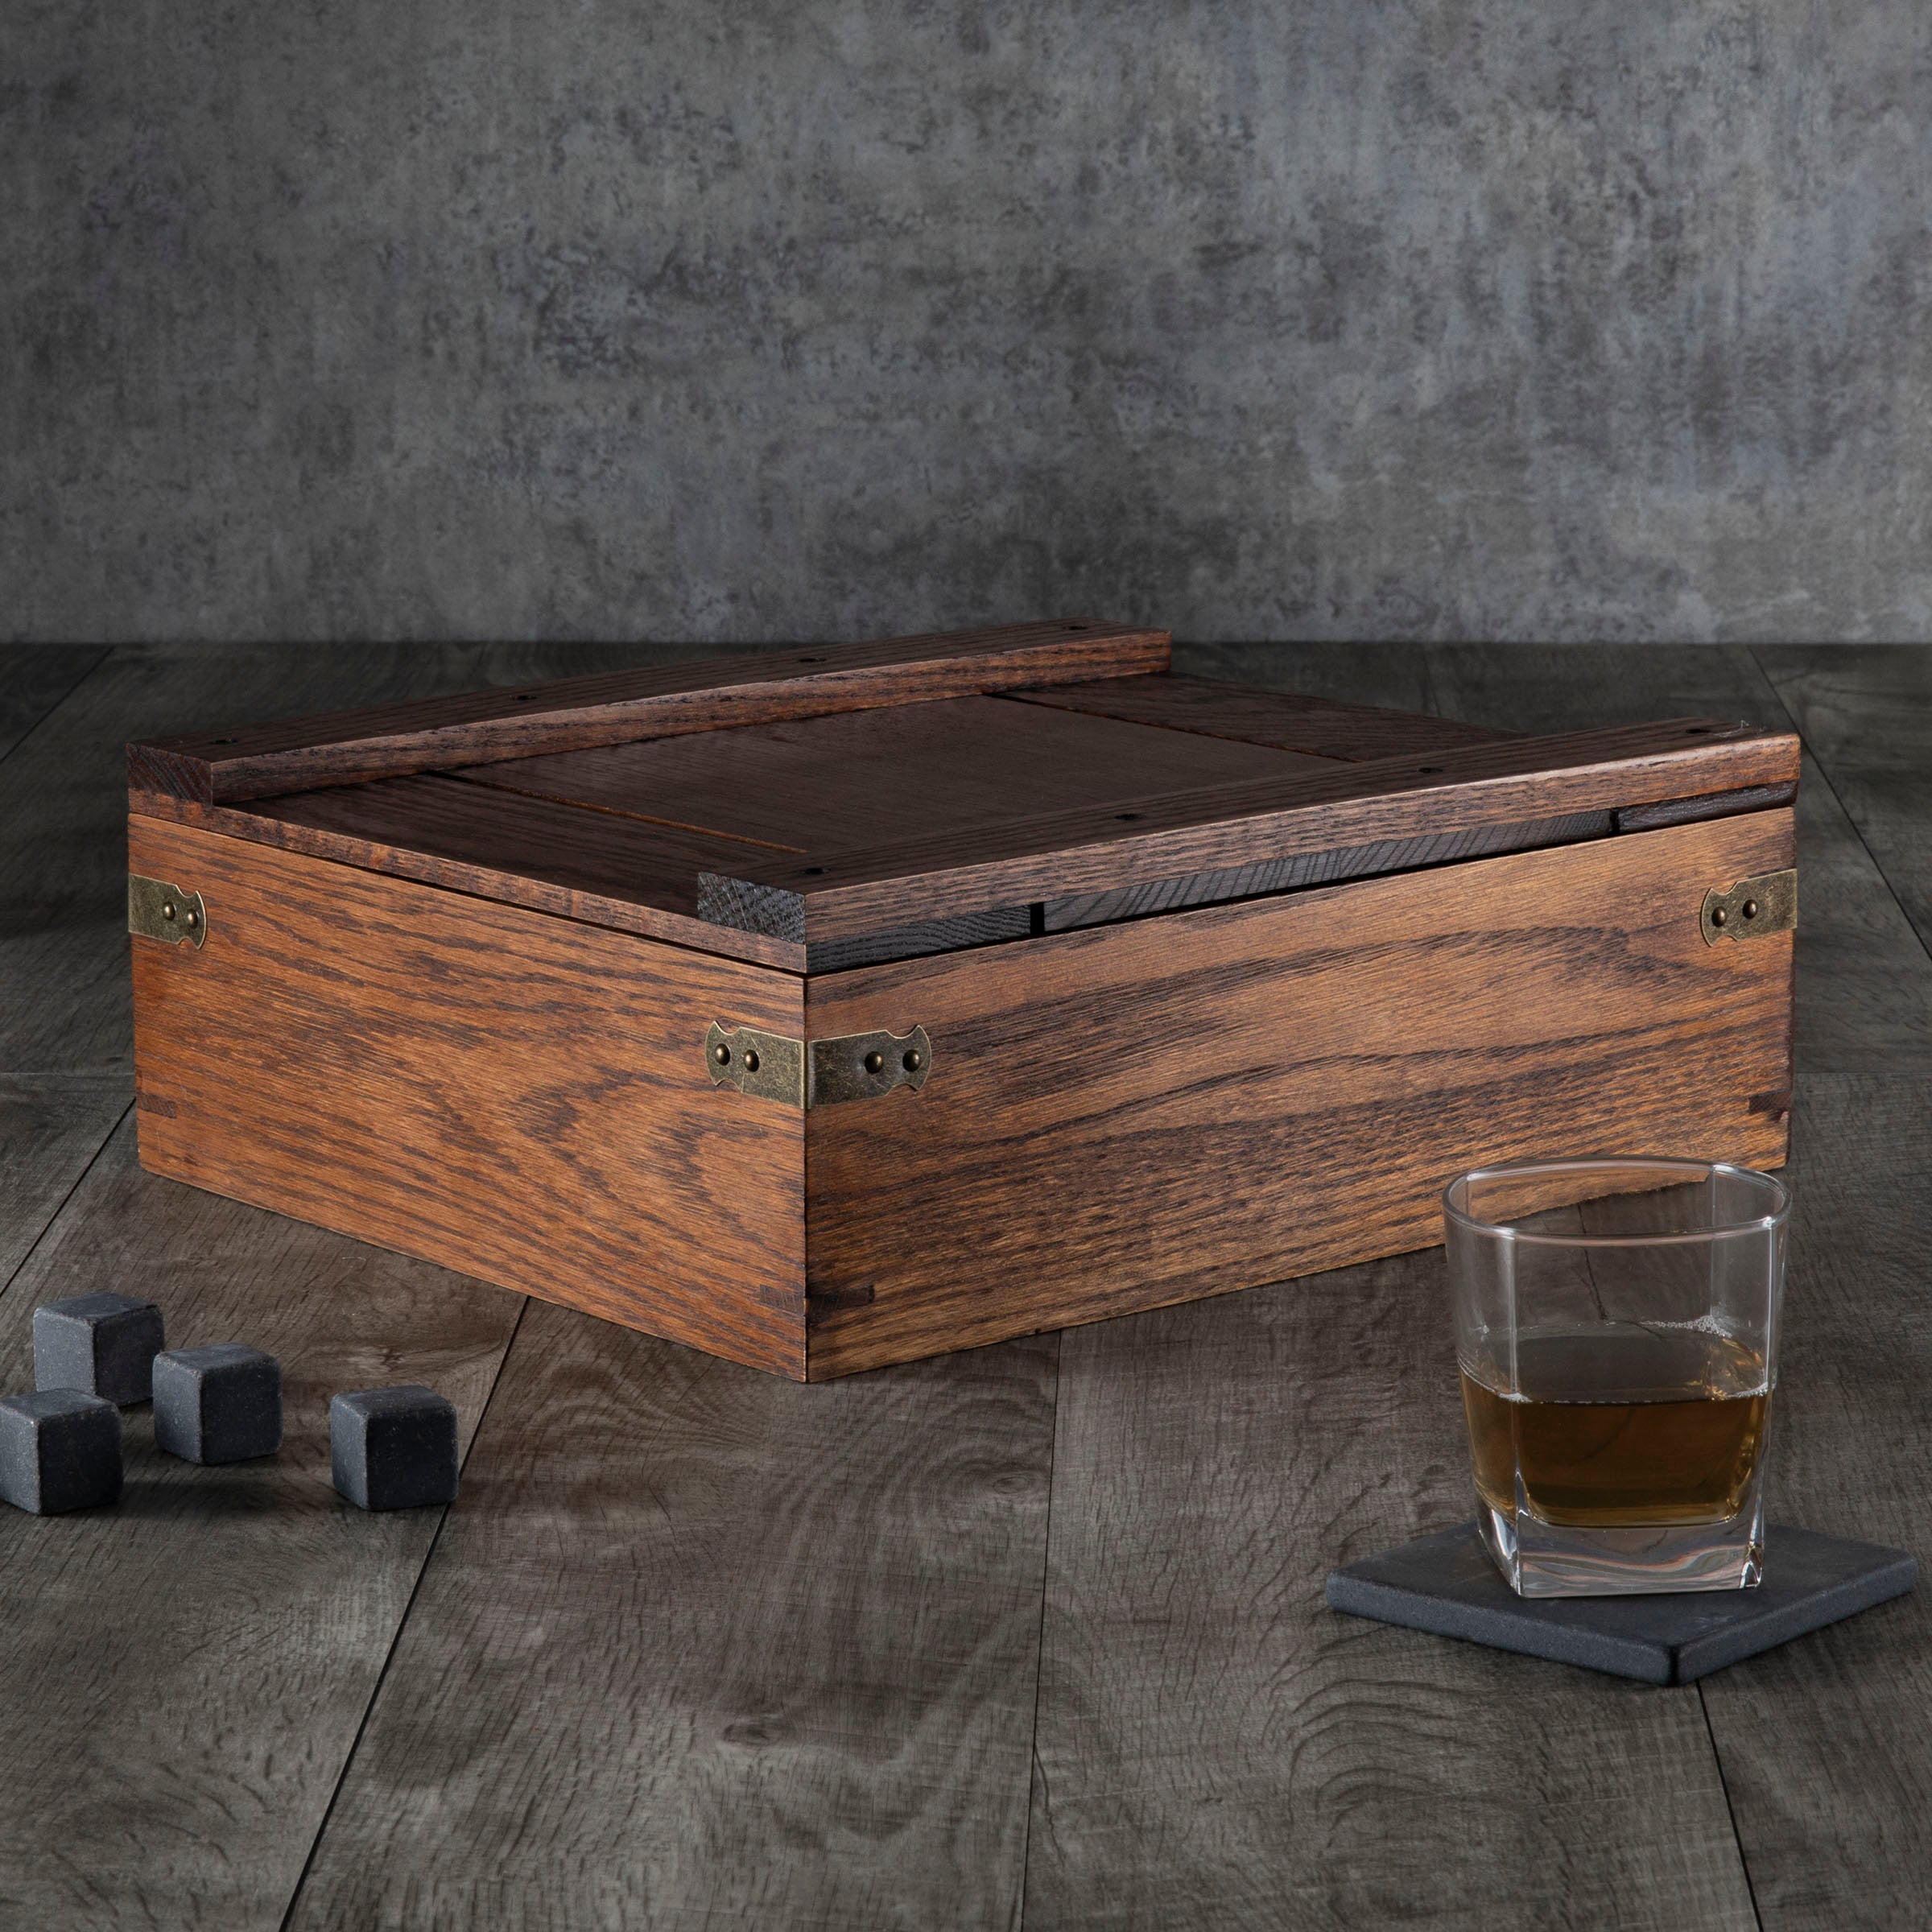 Iowa Hawkeyes - Whiskey Box Gift Set